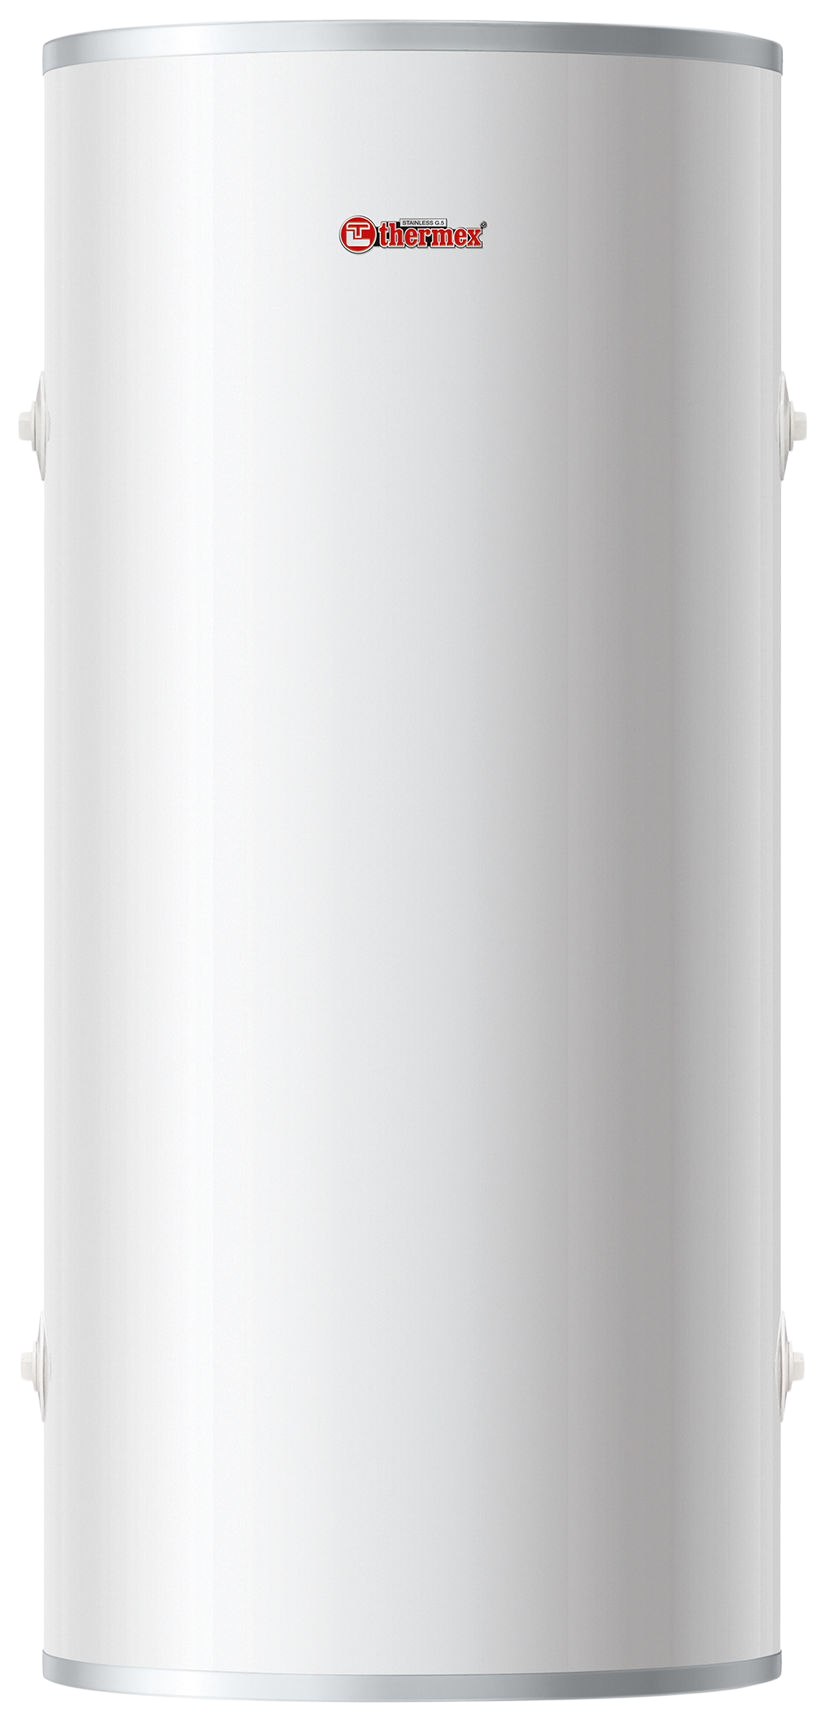 Водонагреватель накопительный THERMEX IR 200 V white водонагреватель накопительный элбэт эвбо 22 white